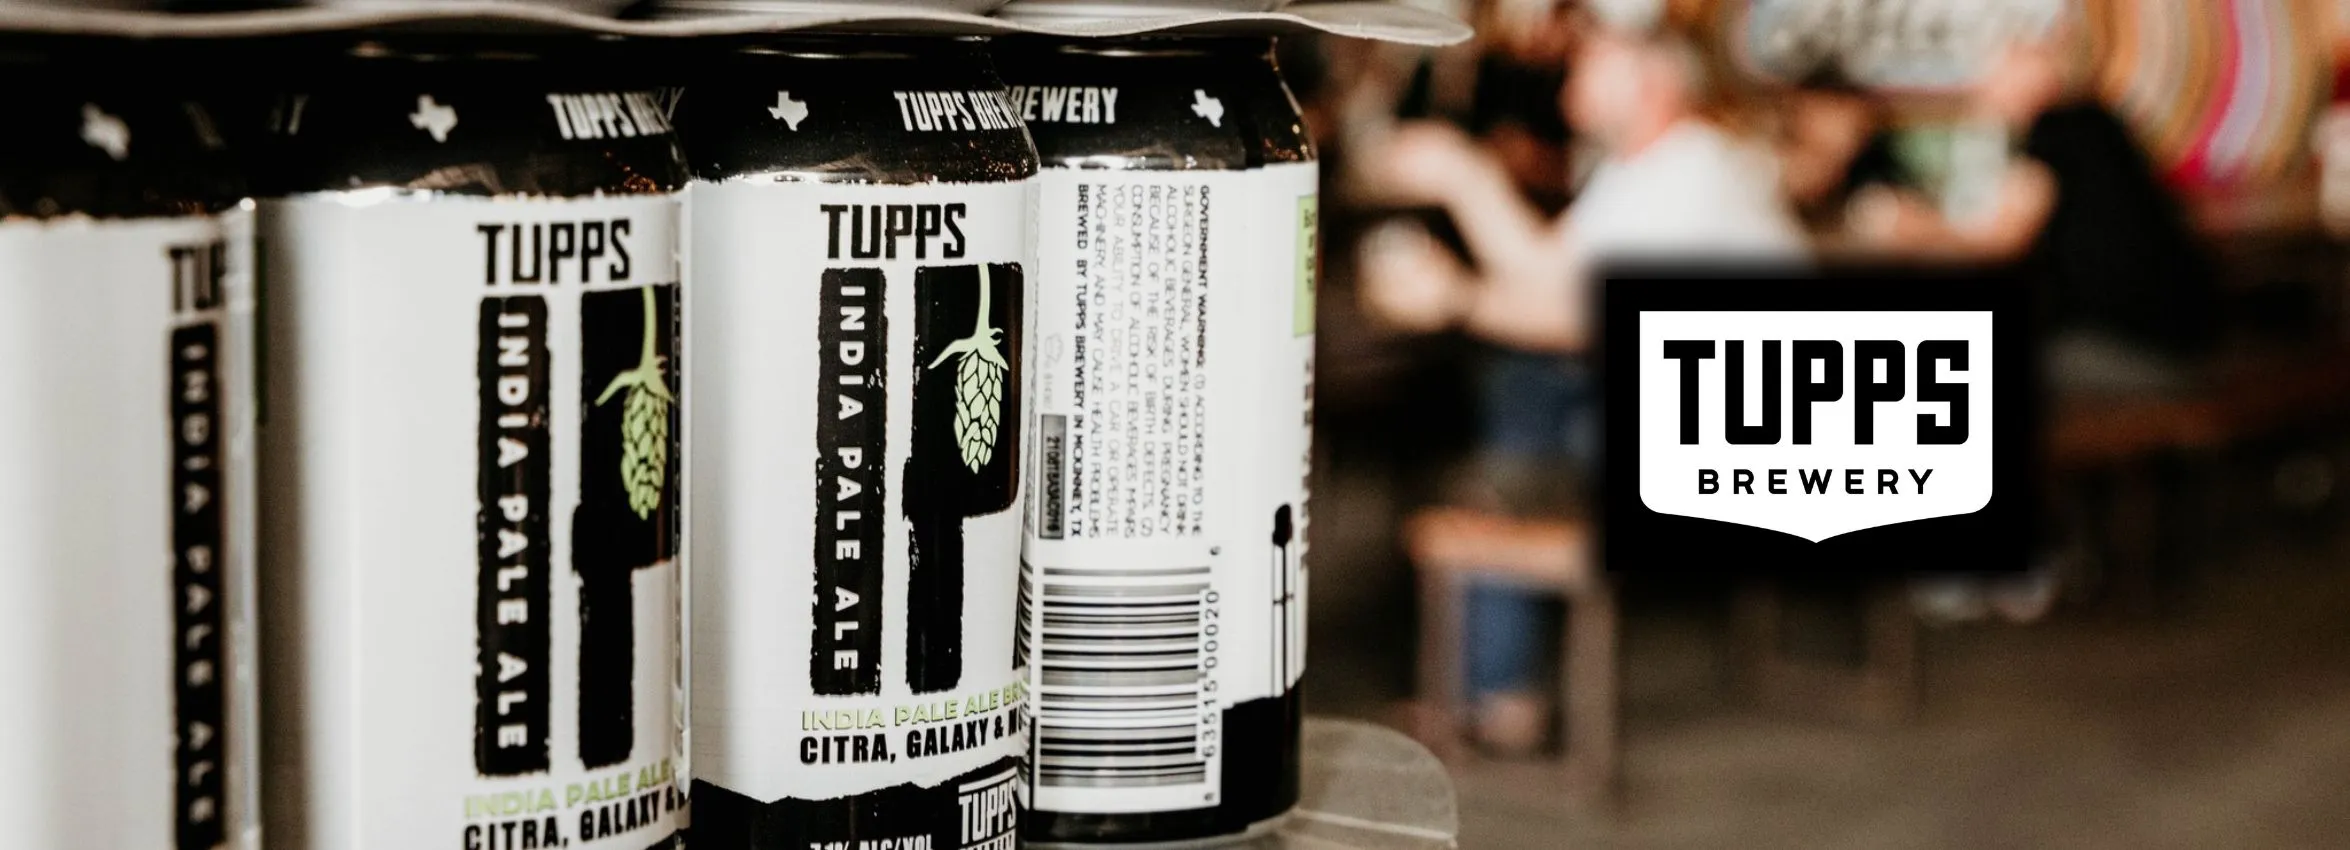 Tupps-Brewery_Desktop_ET